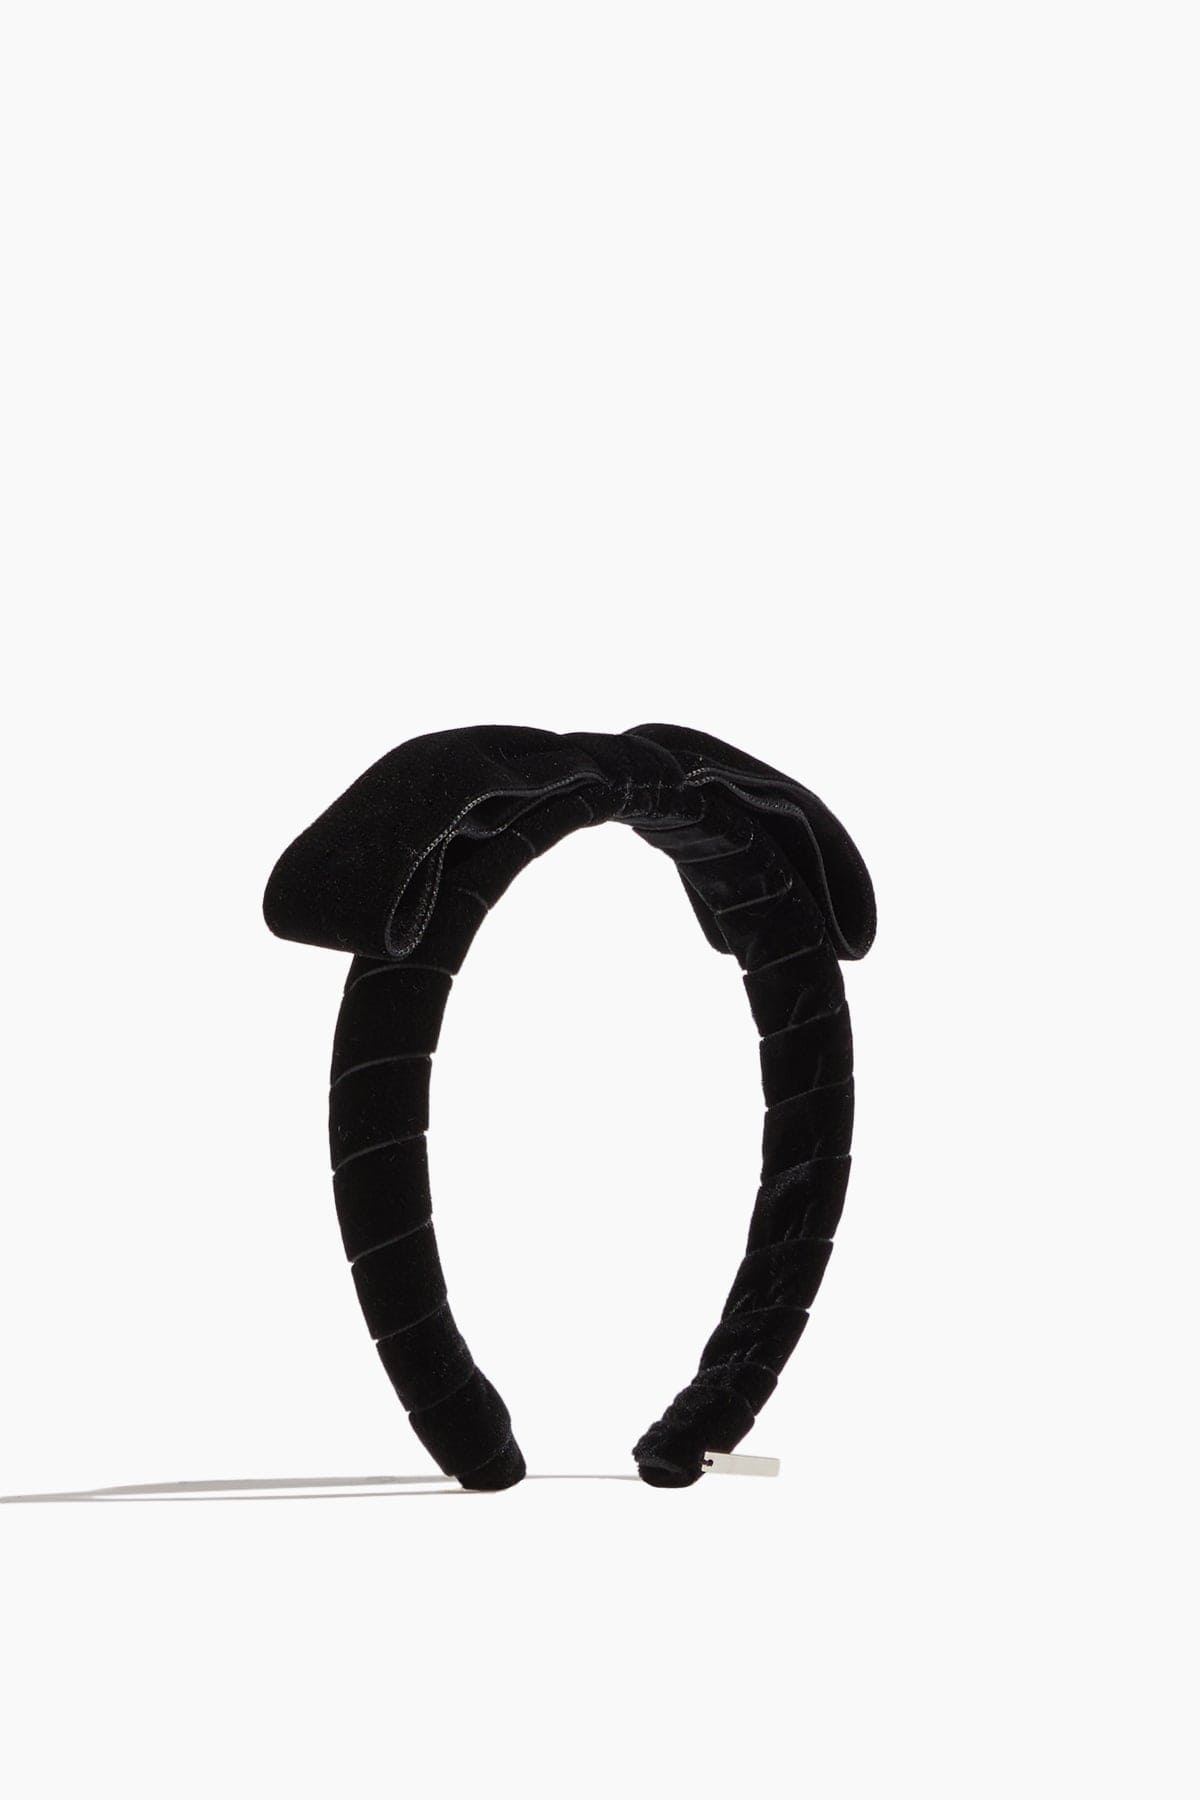 Gigi Burris Hair Accessories Corinne Headband in Black Gigi Burris Corinne Headband in Black